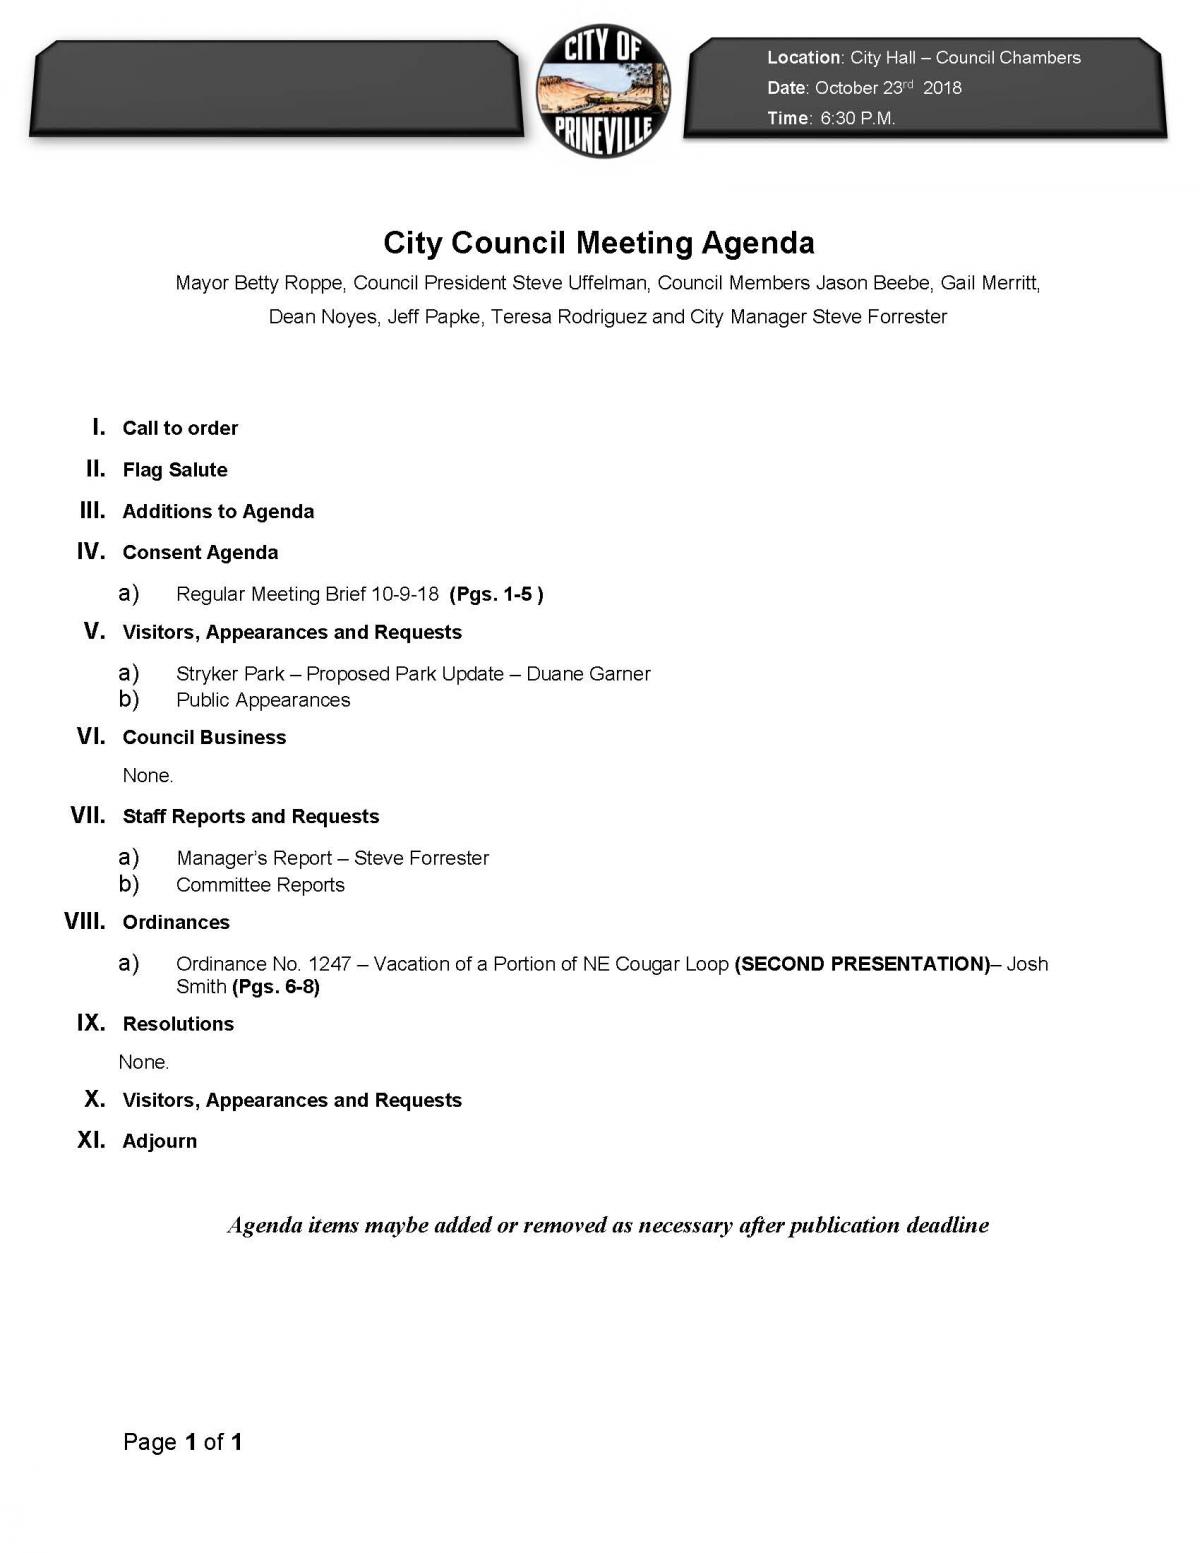 Council Agenda 10-23-18